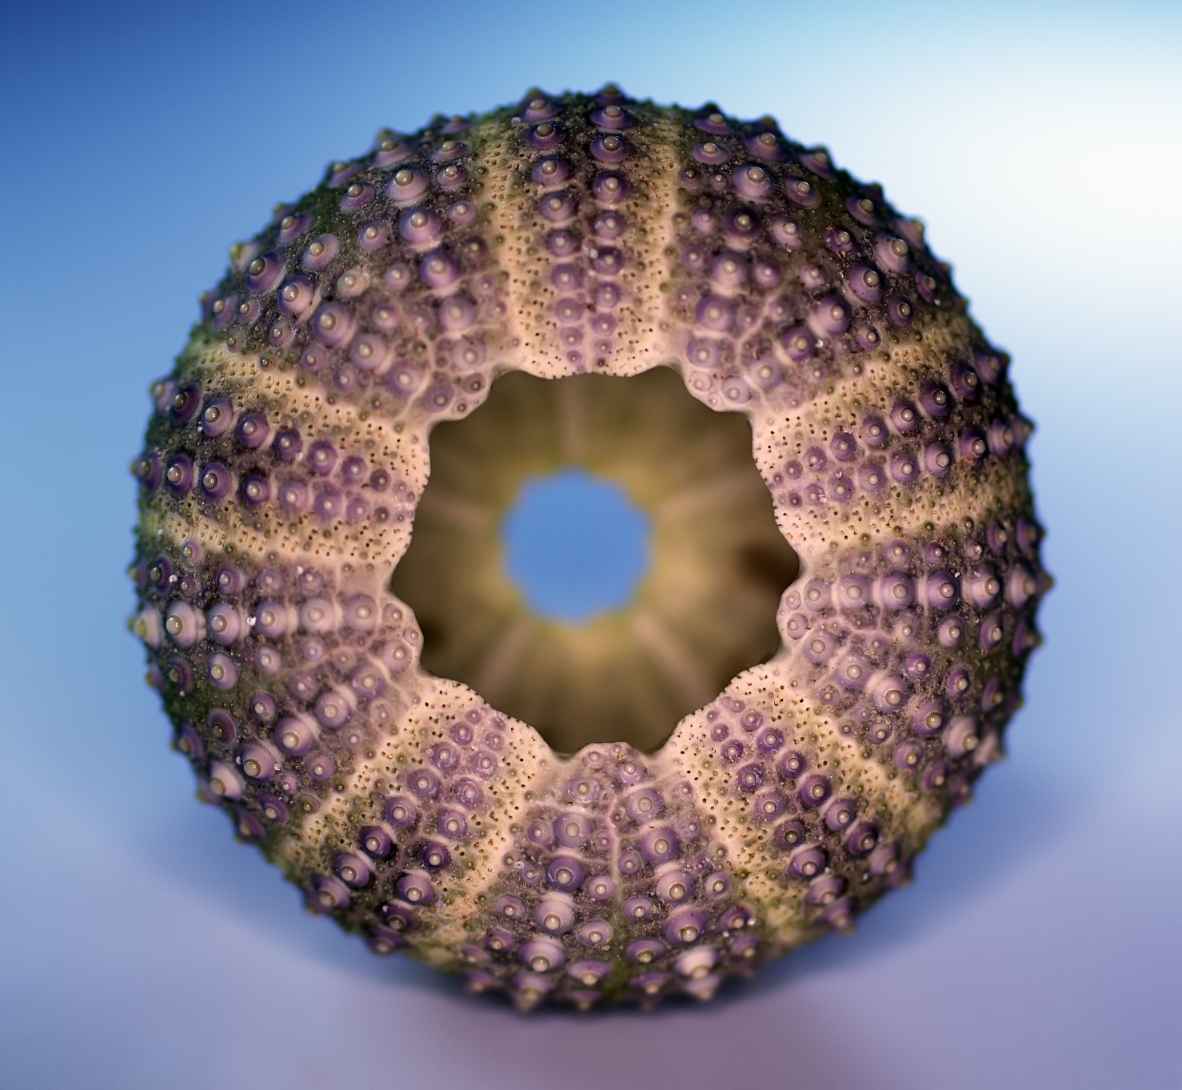 Sea Urchin having a perfect radial symmetry